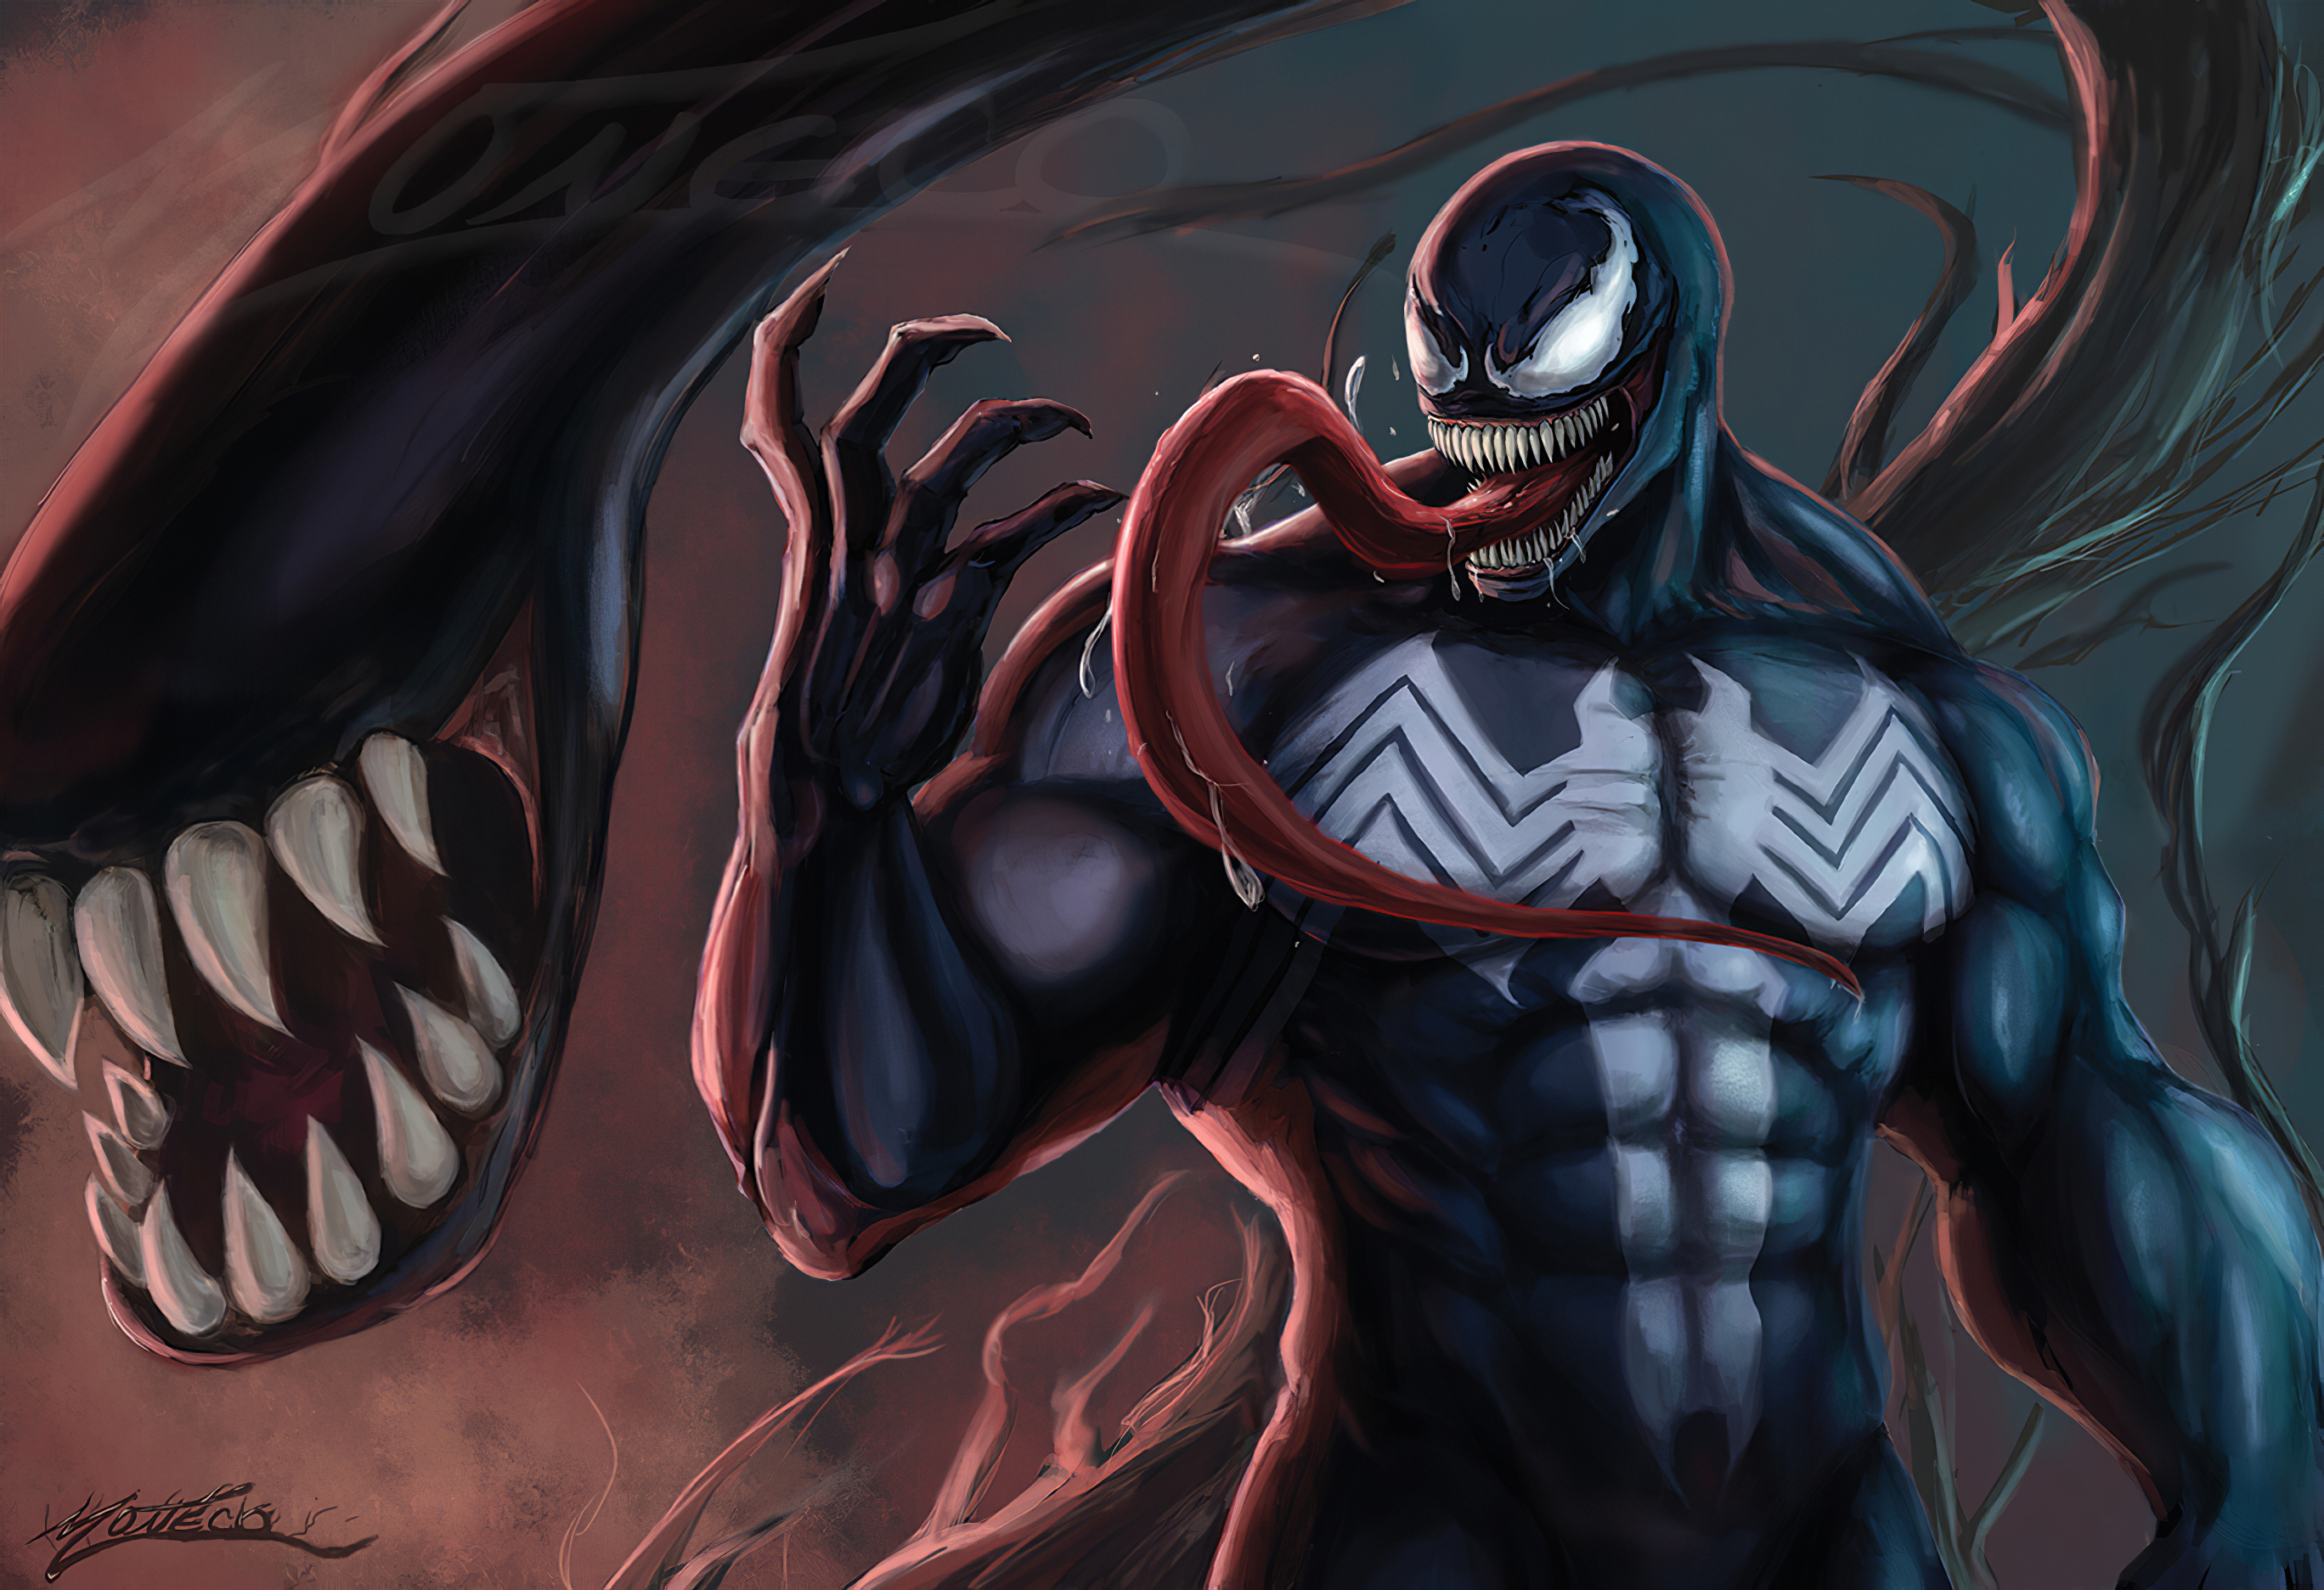 Venom 4K 2020 Wallpapers